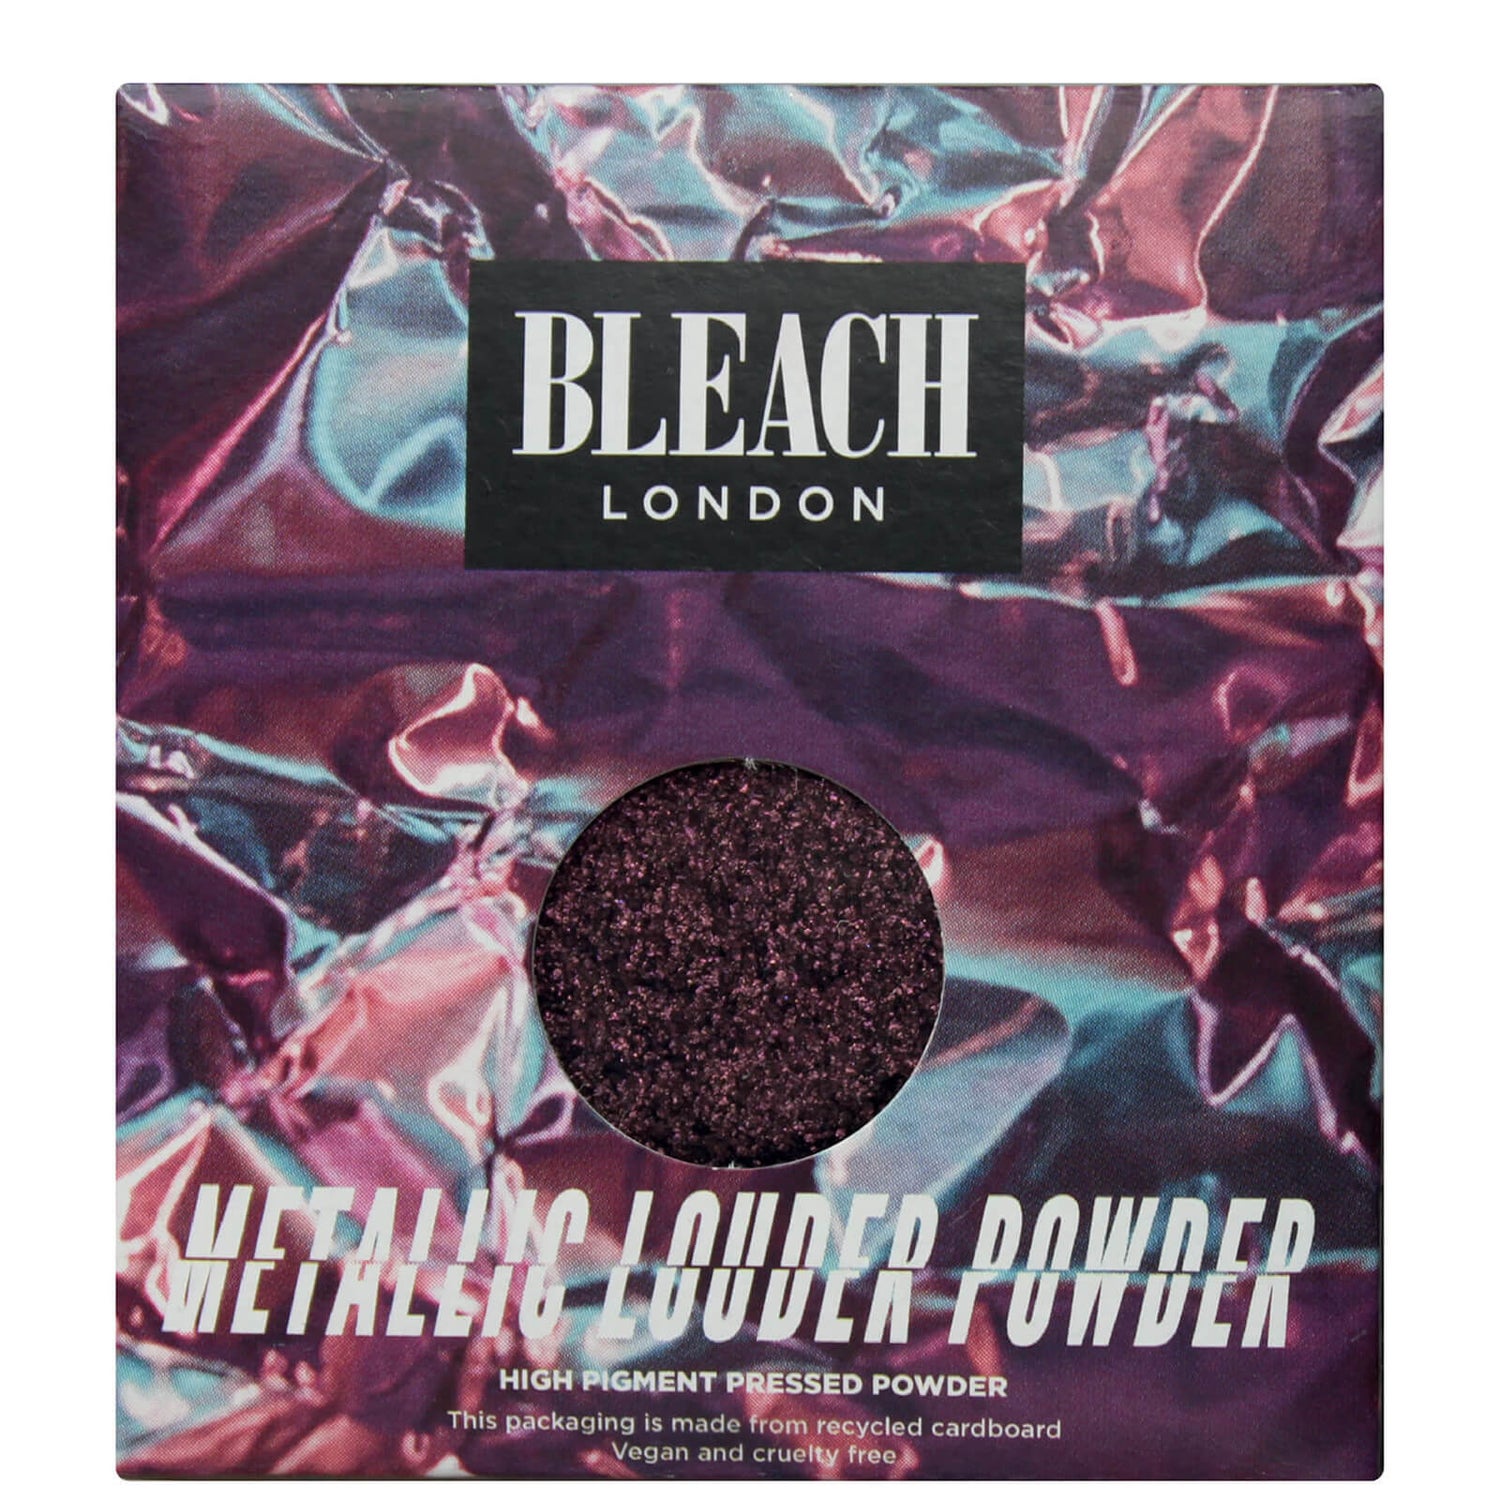 BLEACH LONDON Metallic Louder Powder Bv 5 Me(블리치 런던 메탈릭 라우더 파우더 Bv 5 Me)